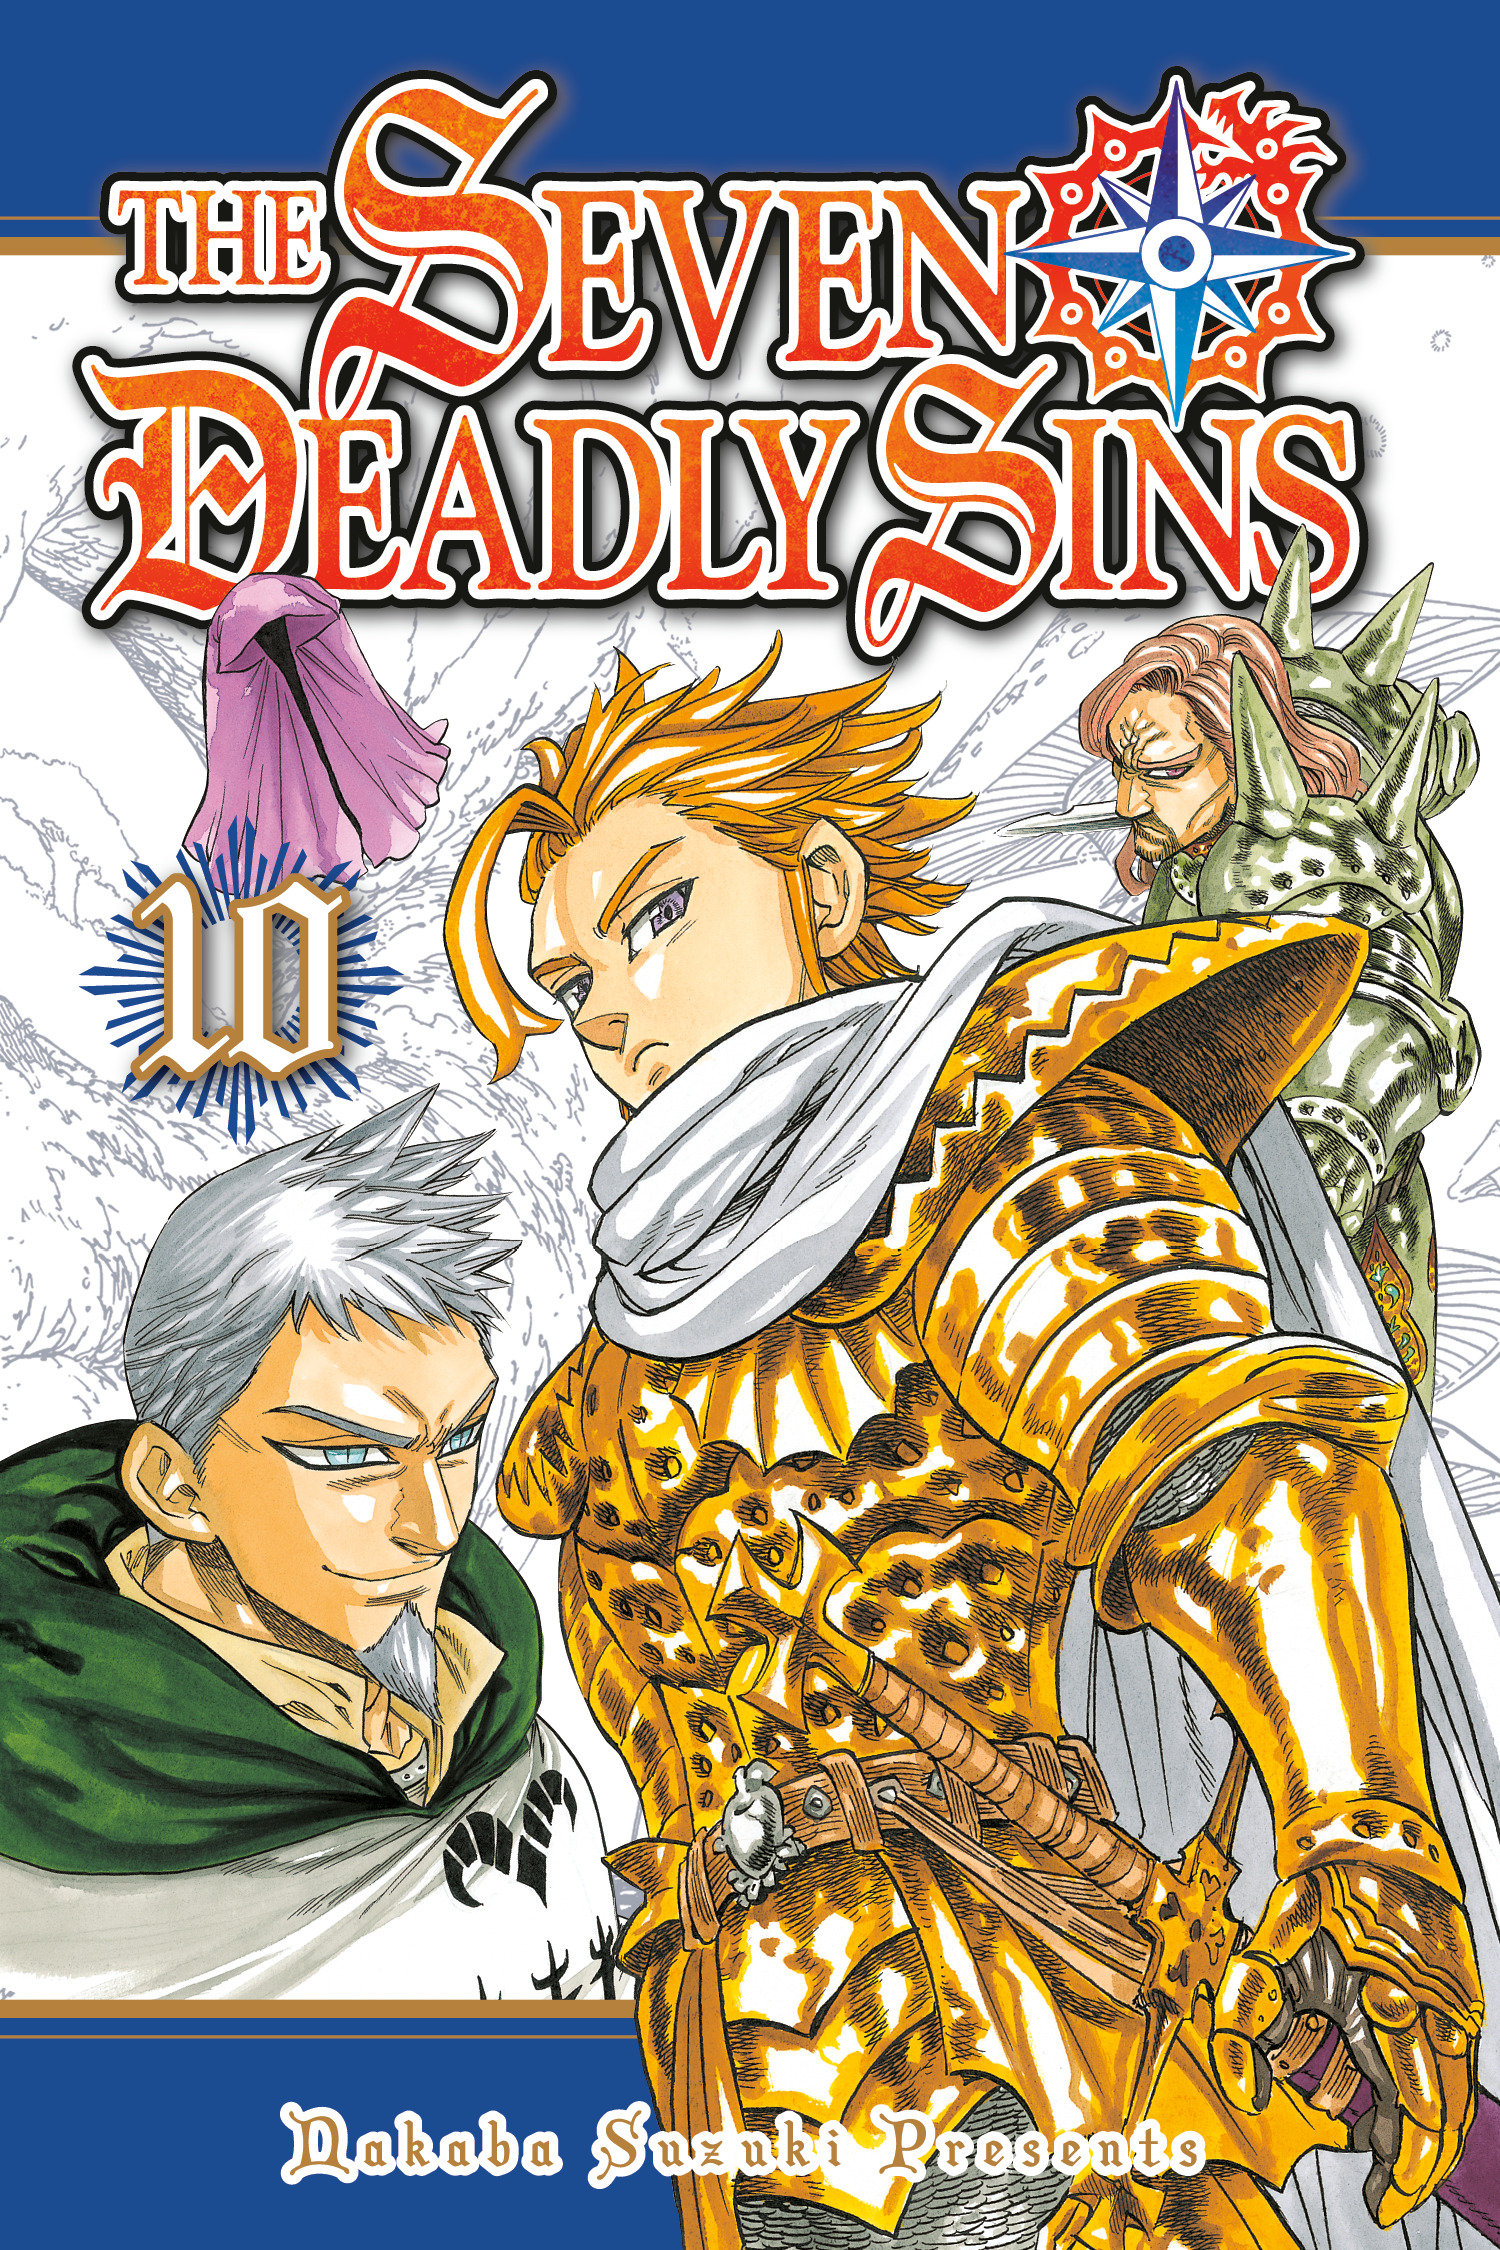 Seven Deadly Sins Omnibus Manga Volume 4 (Volume 10-12)